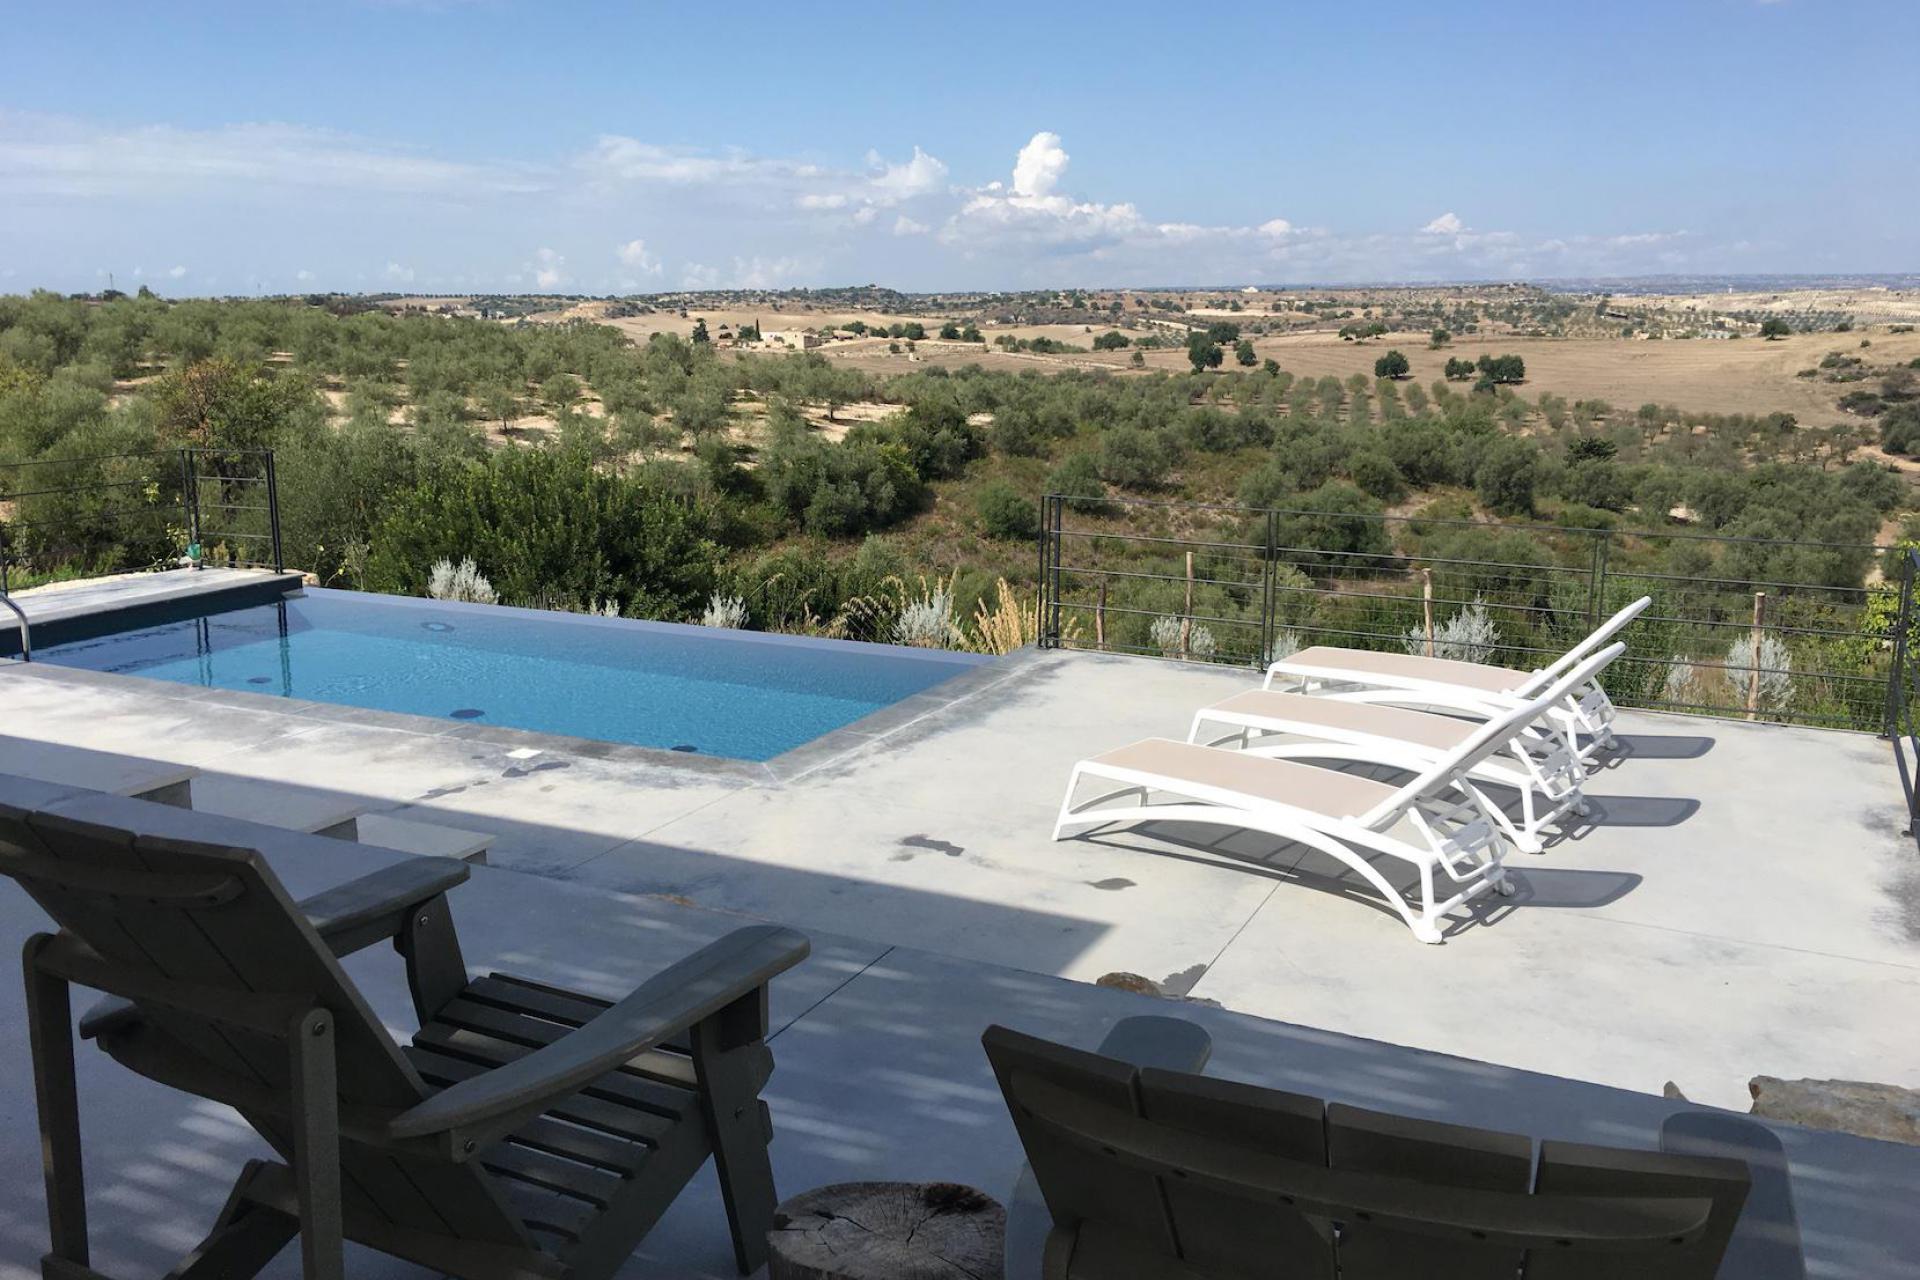 Agriturismo Sicilie Villa met zeezicht en privè zwembad in Sicilië